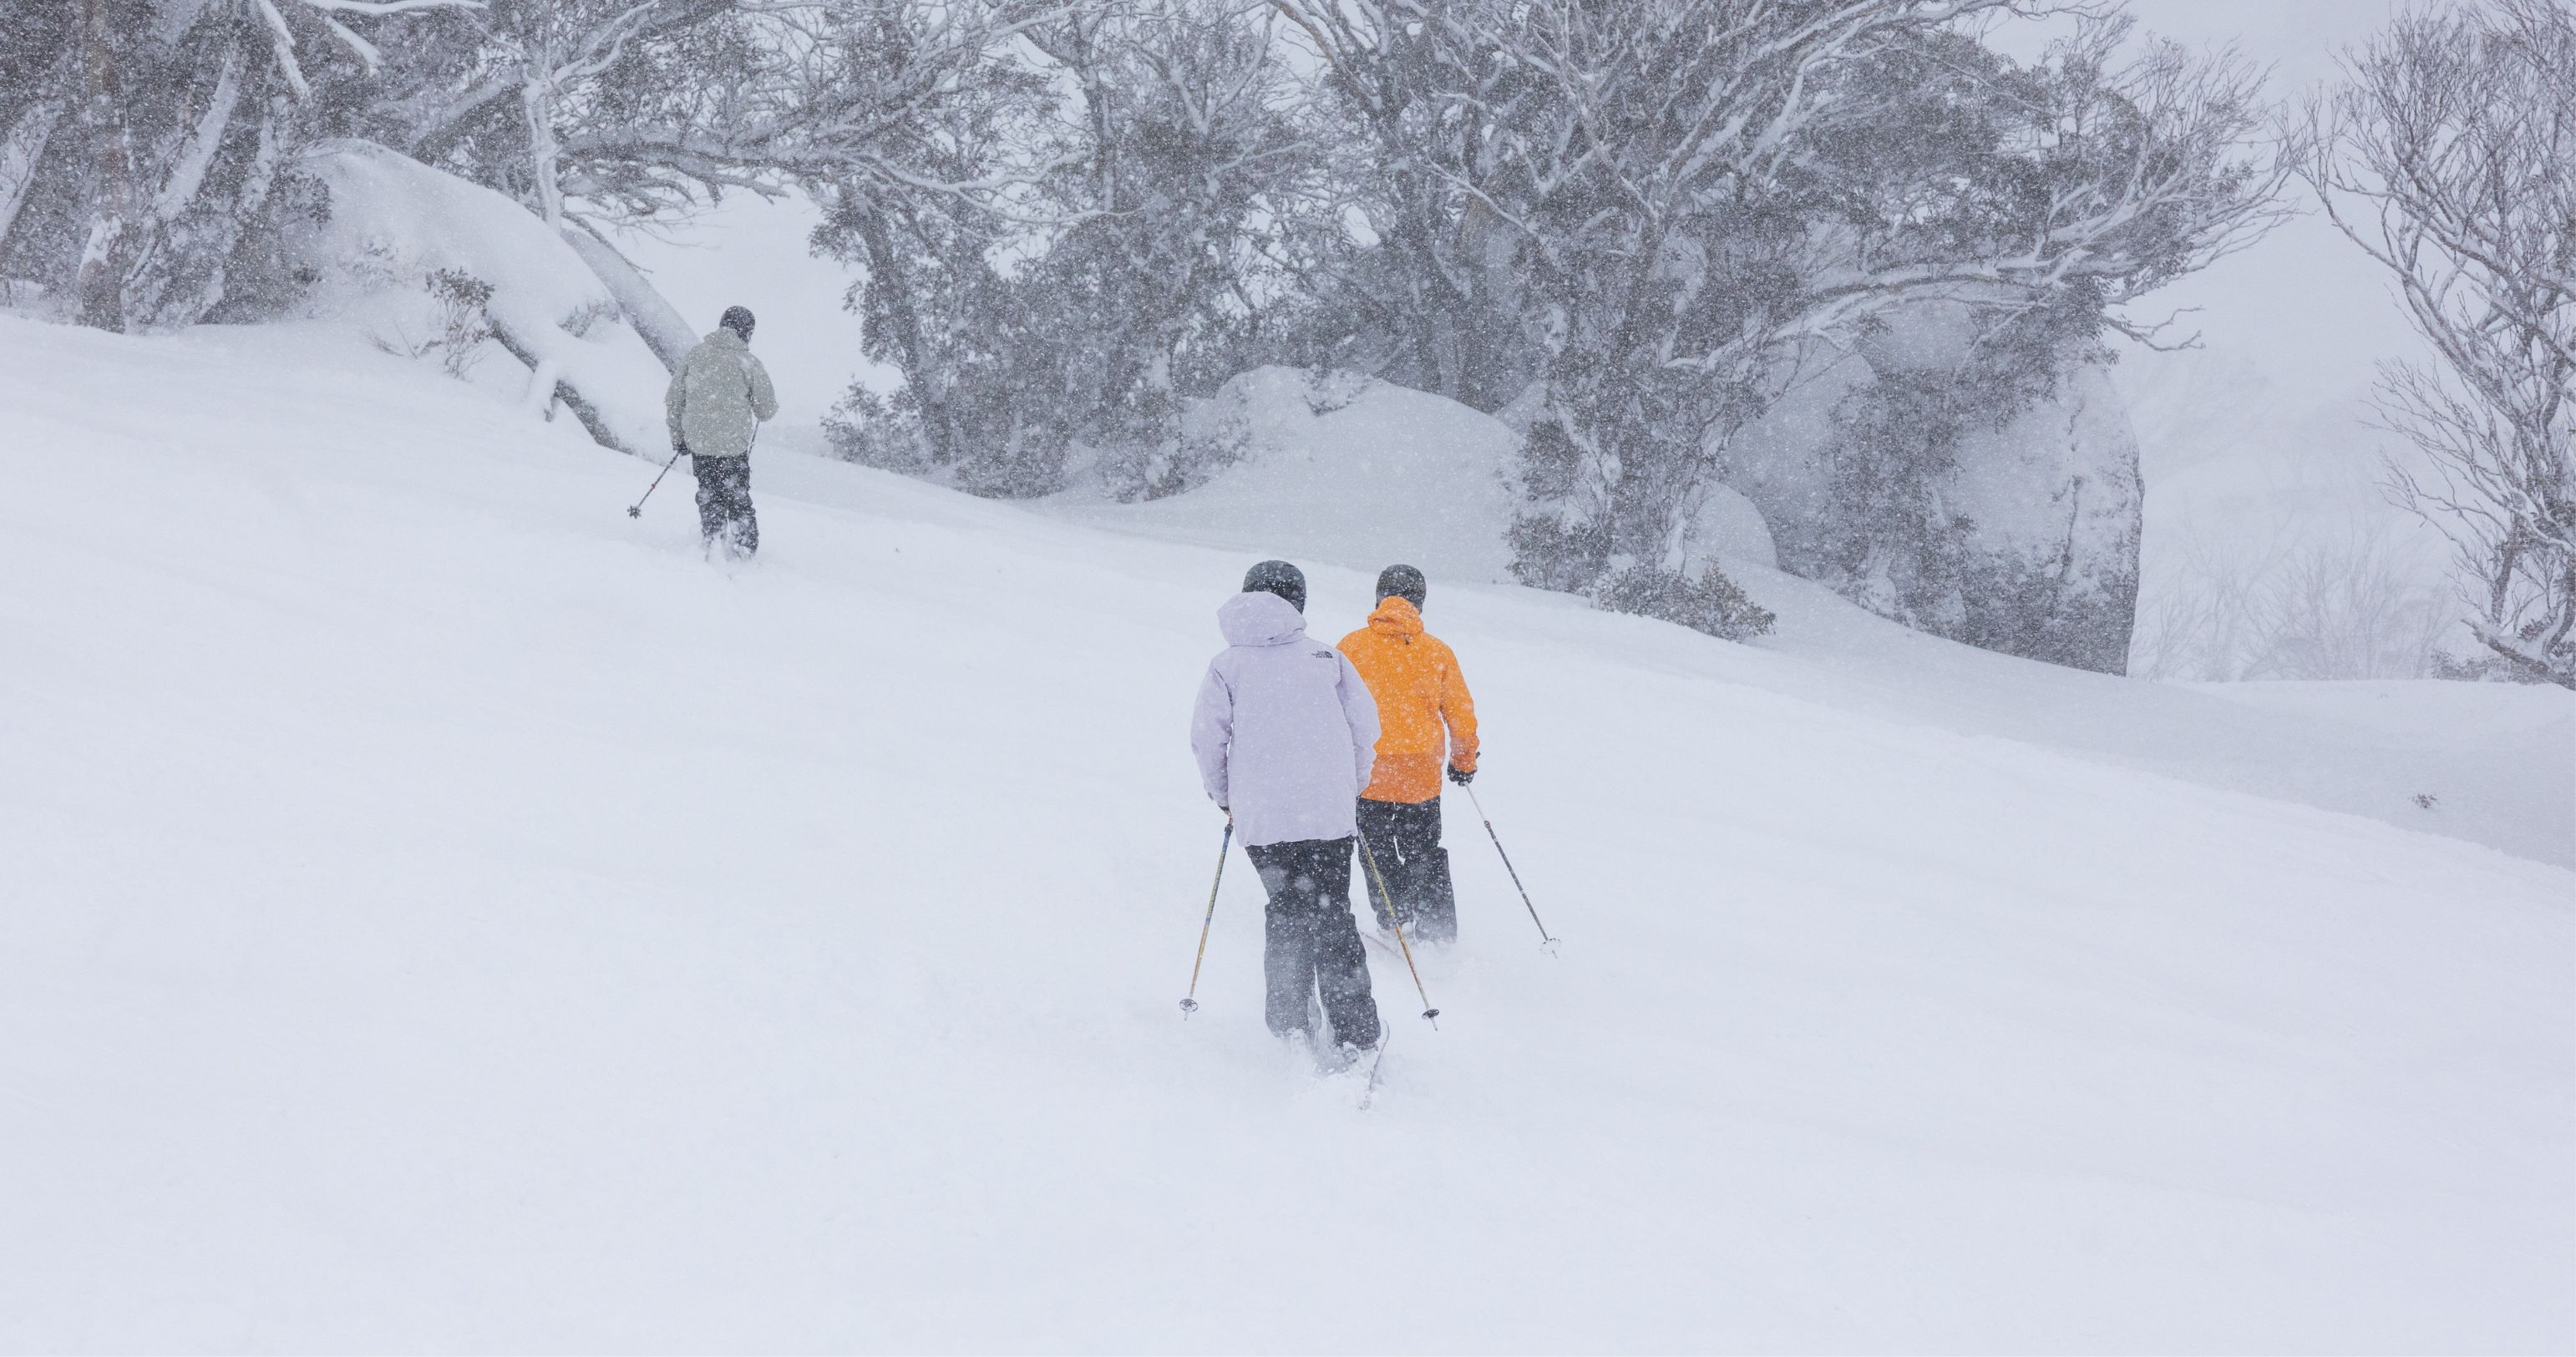 3 people skiing in snow